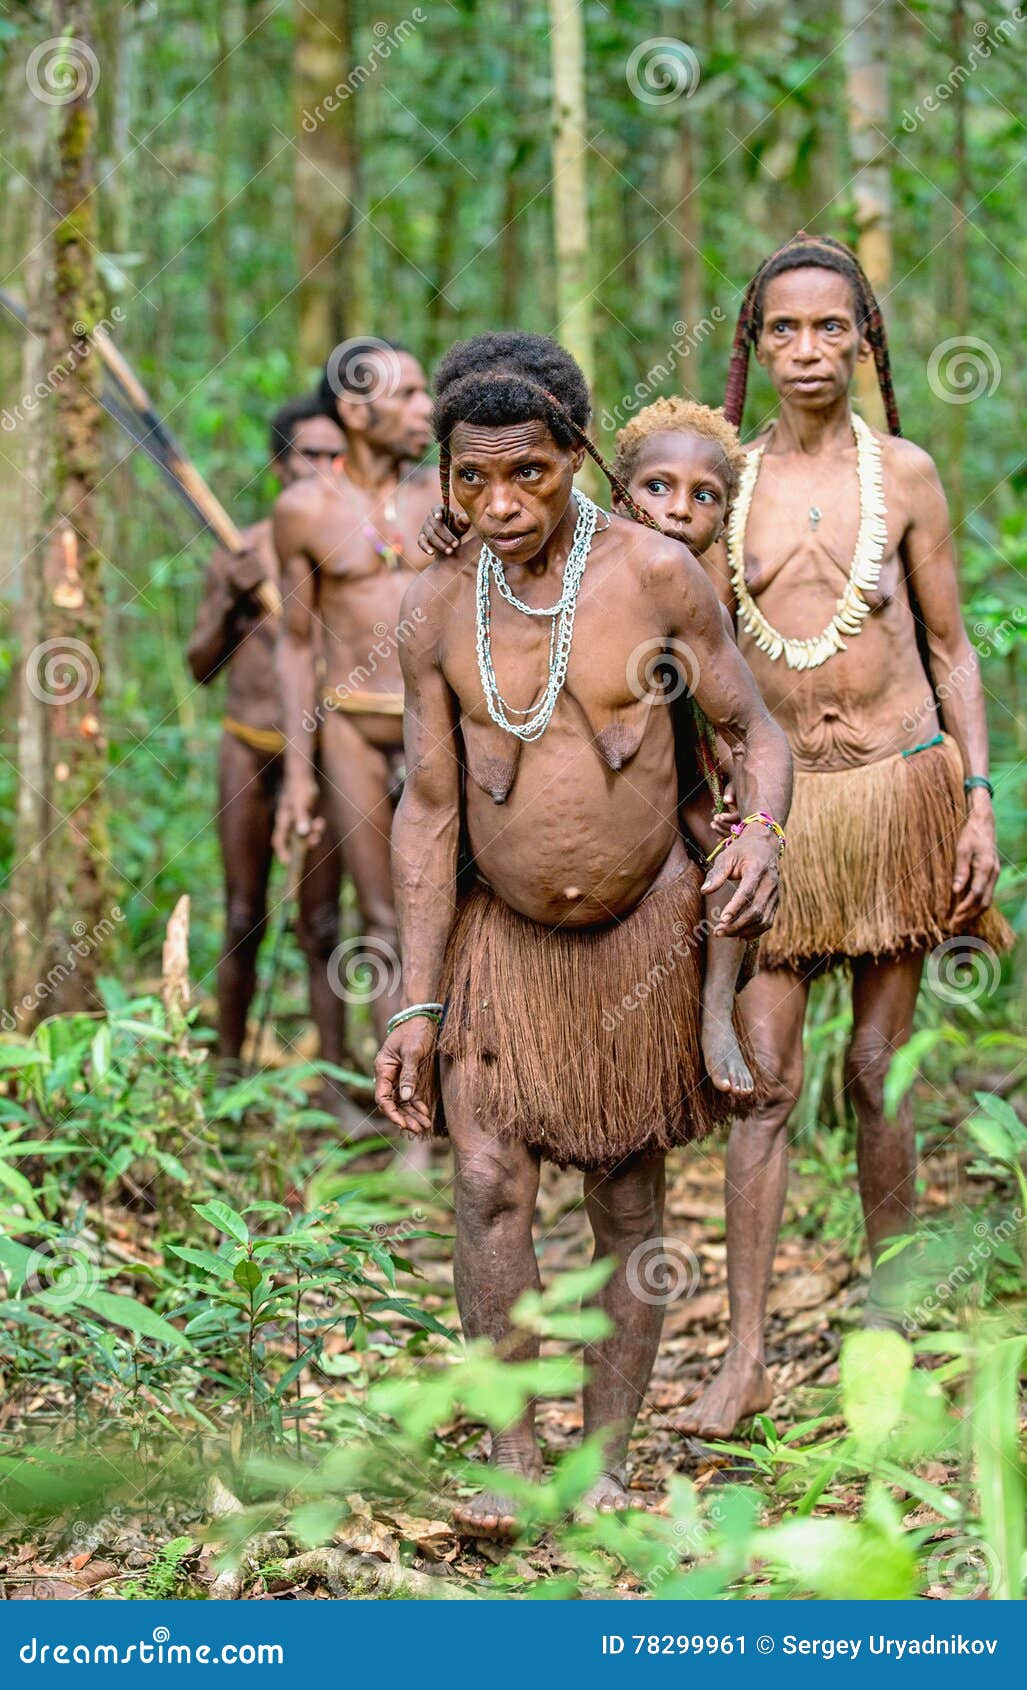 Nude Tribal People